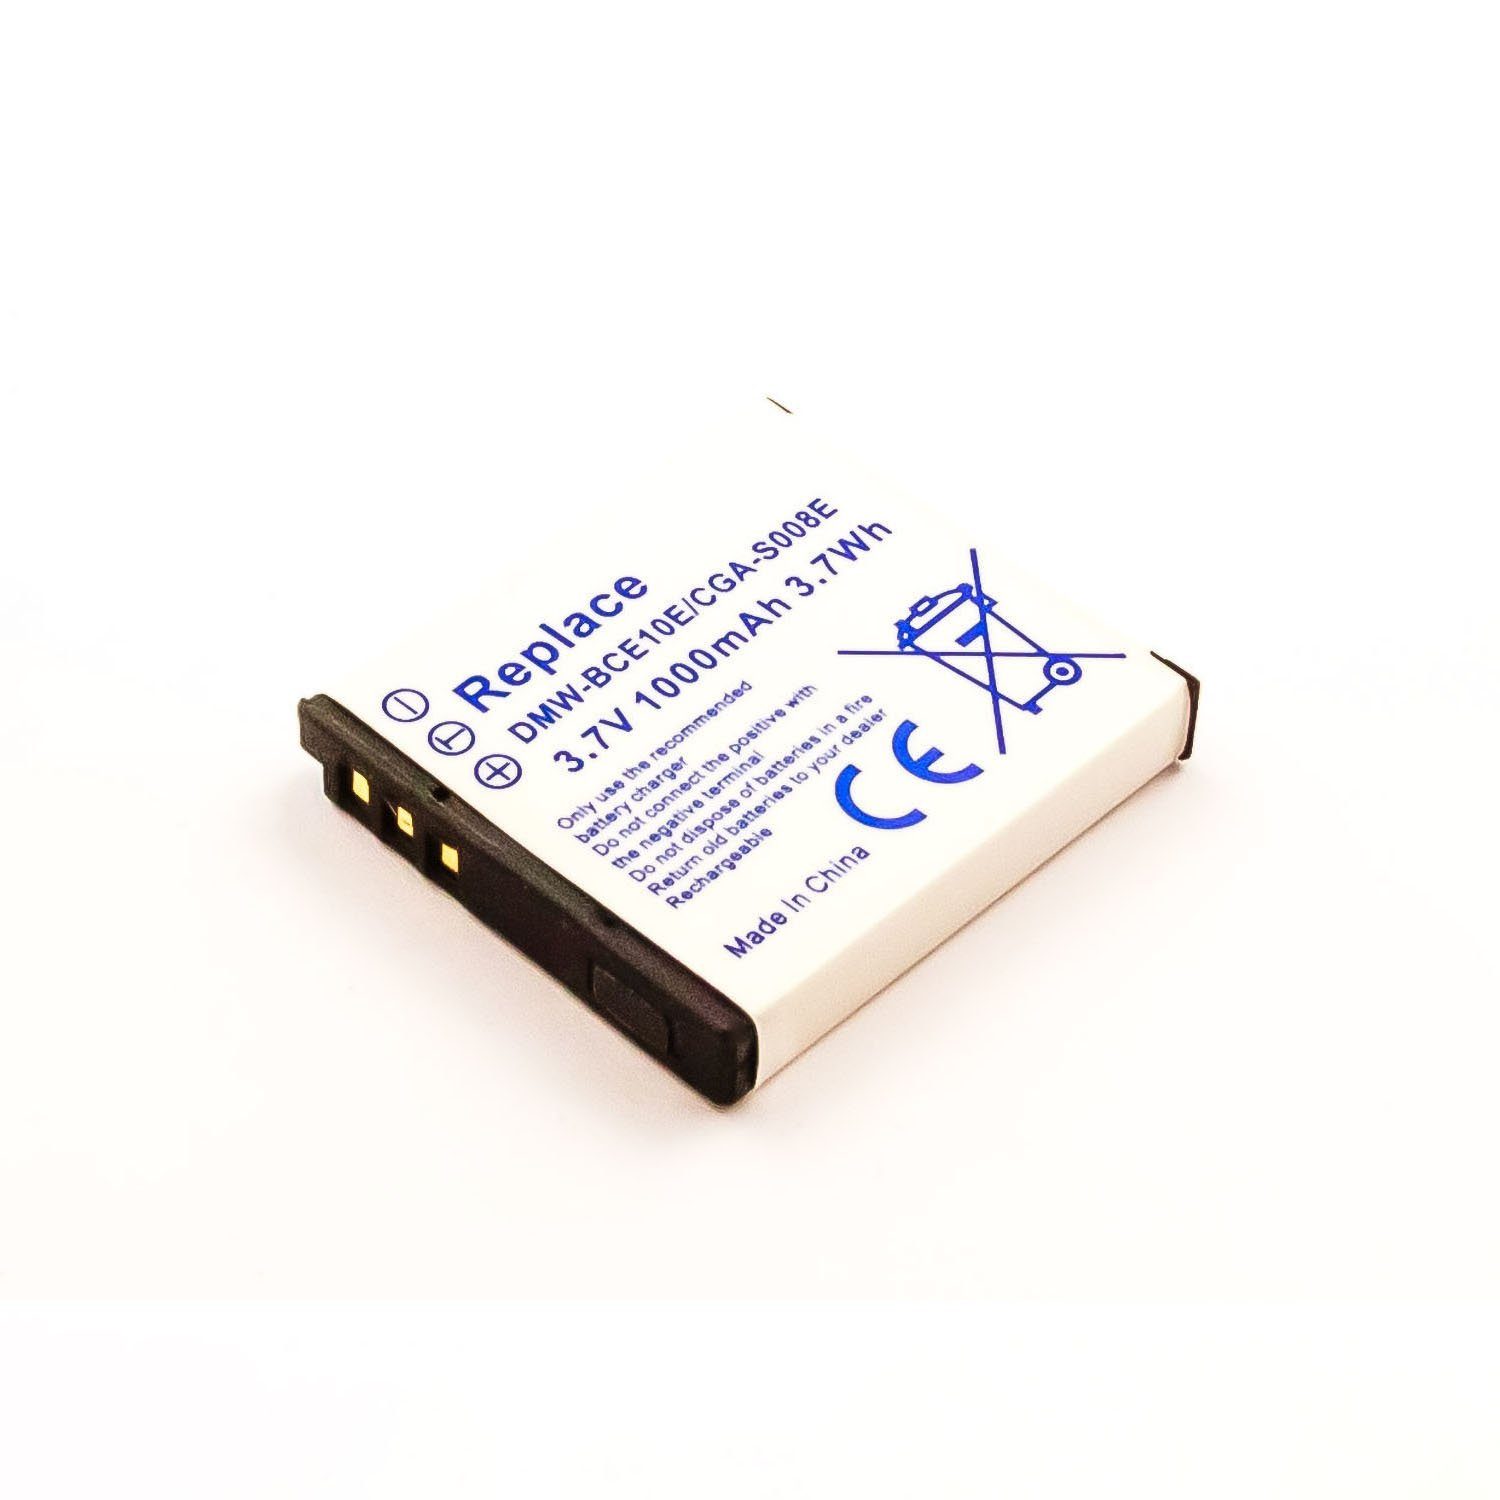 DMC-FX35 900 (1 Akku Akku kompatibel Akku Panasonic St) mit LUMIX MobiloTec mAh